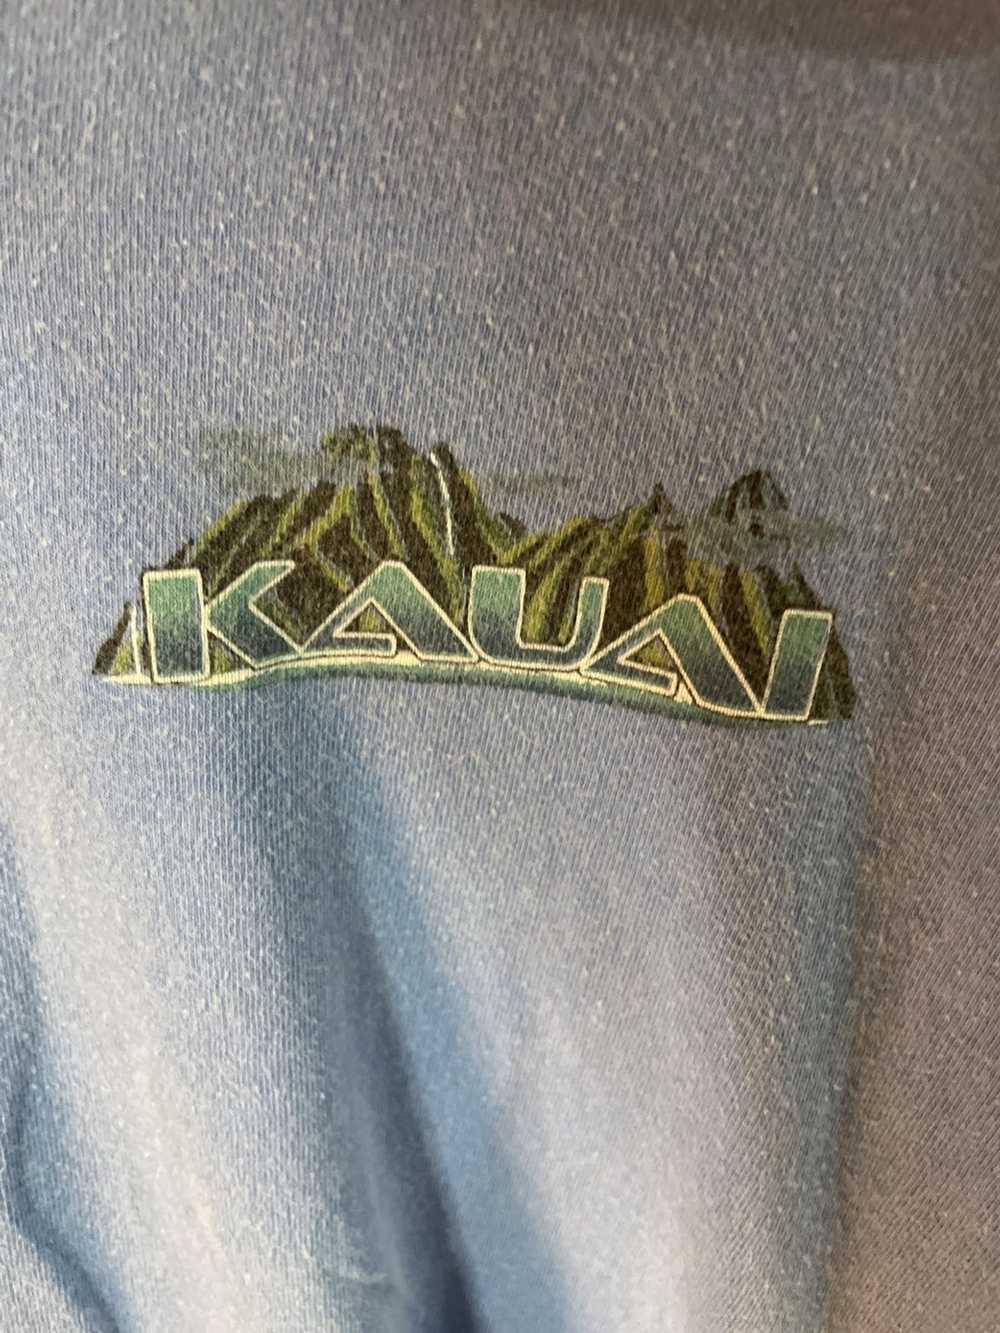 Vintage Authentic Hawaii Kauai T-Shirt - image 3